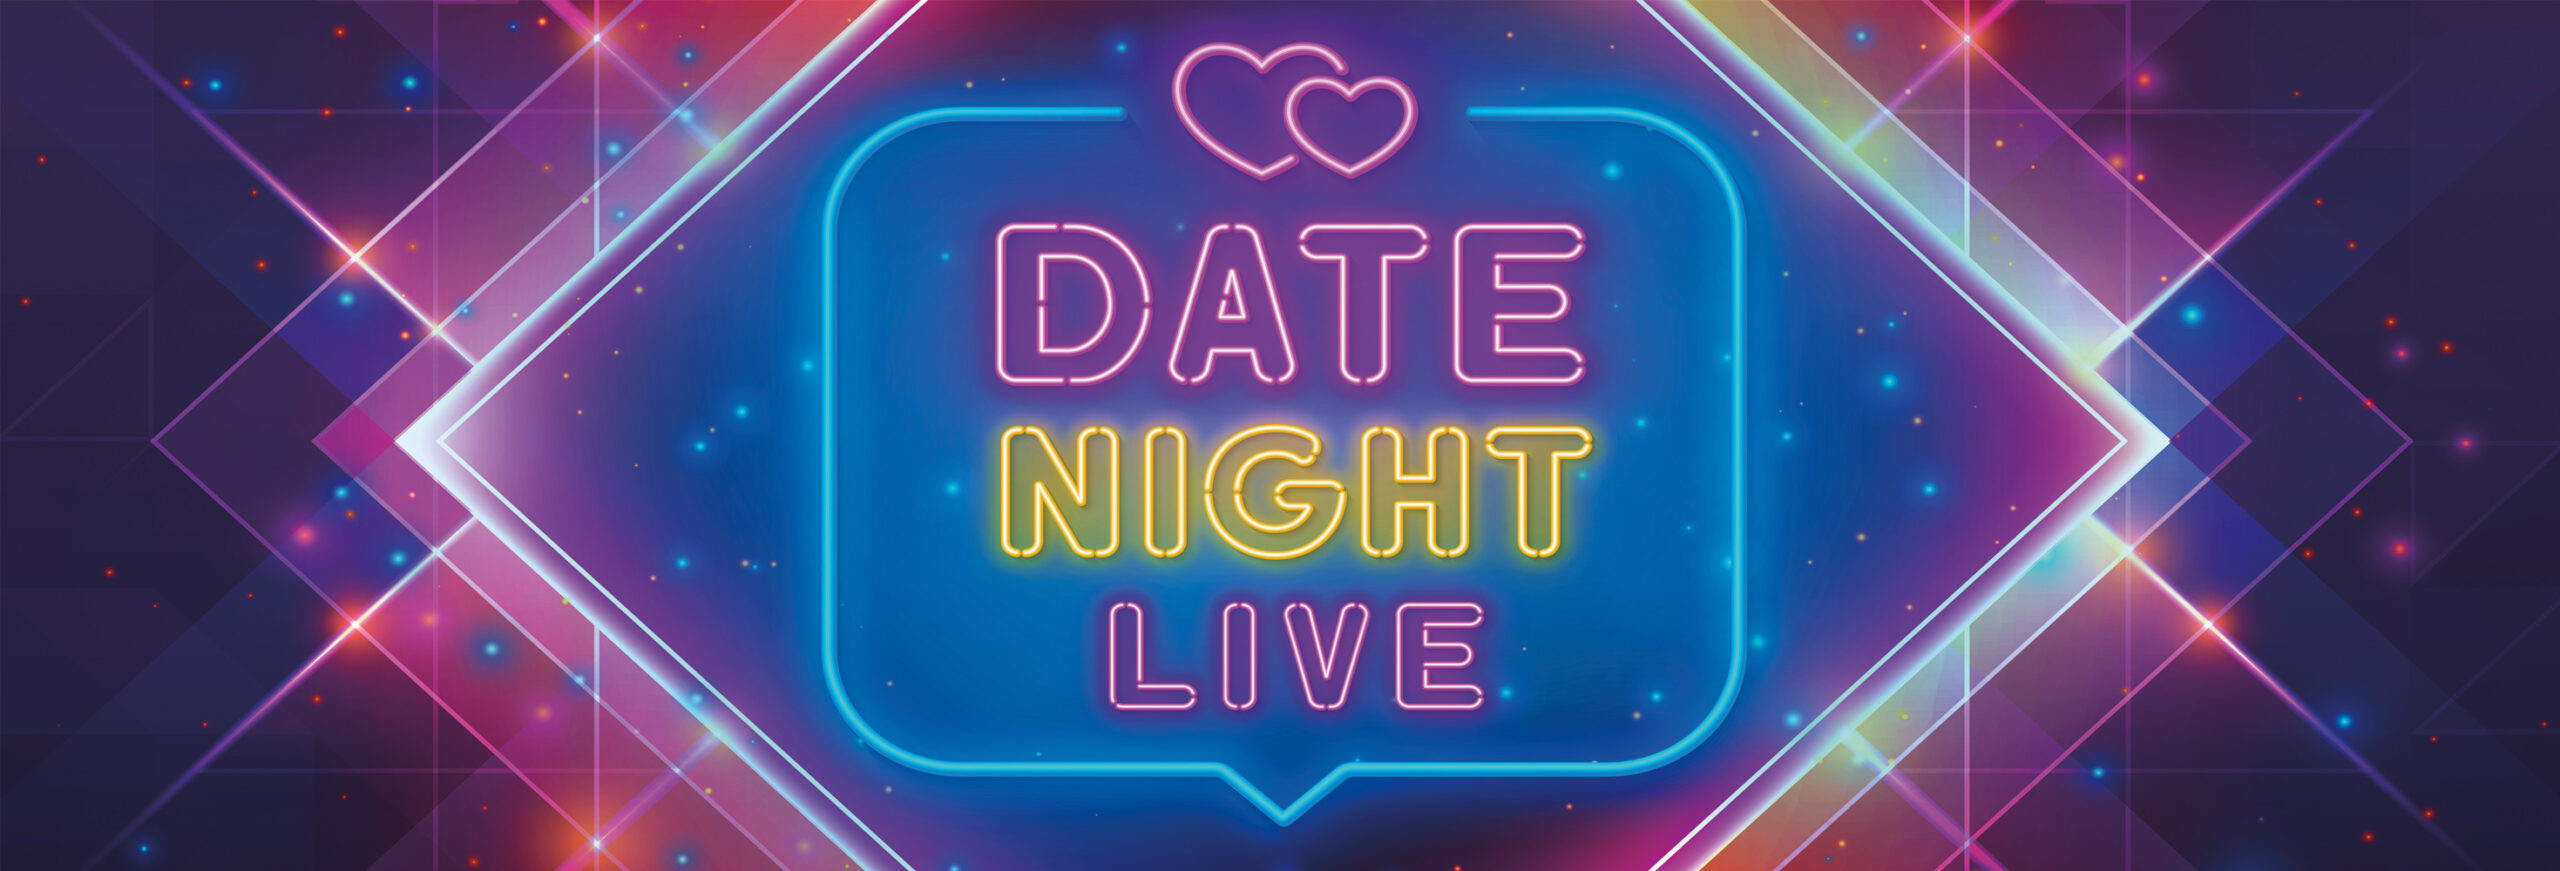 Date Night Live